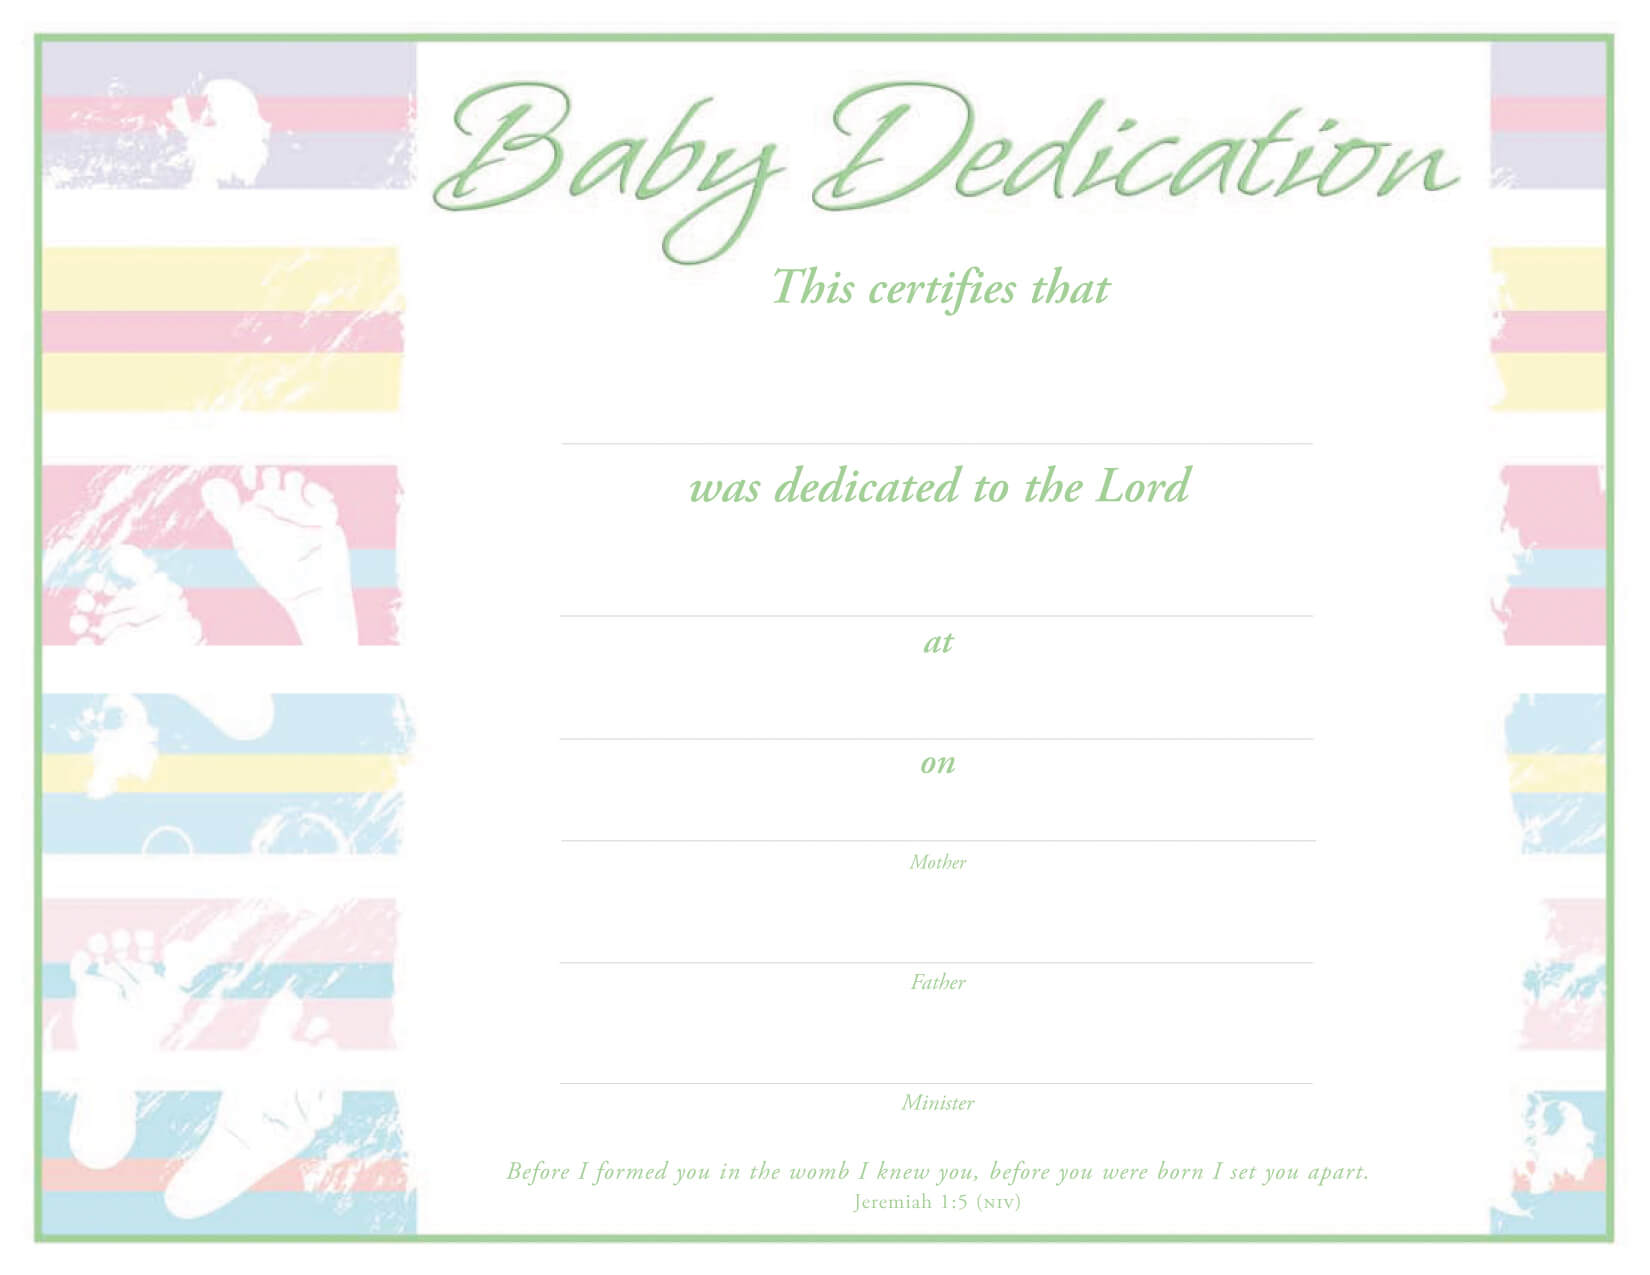 18D76 Baby Dedication Certificates C Template Business Pertaining To Baby Dedication Certificate Template